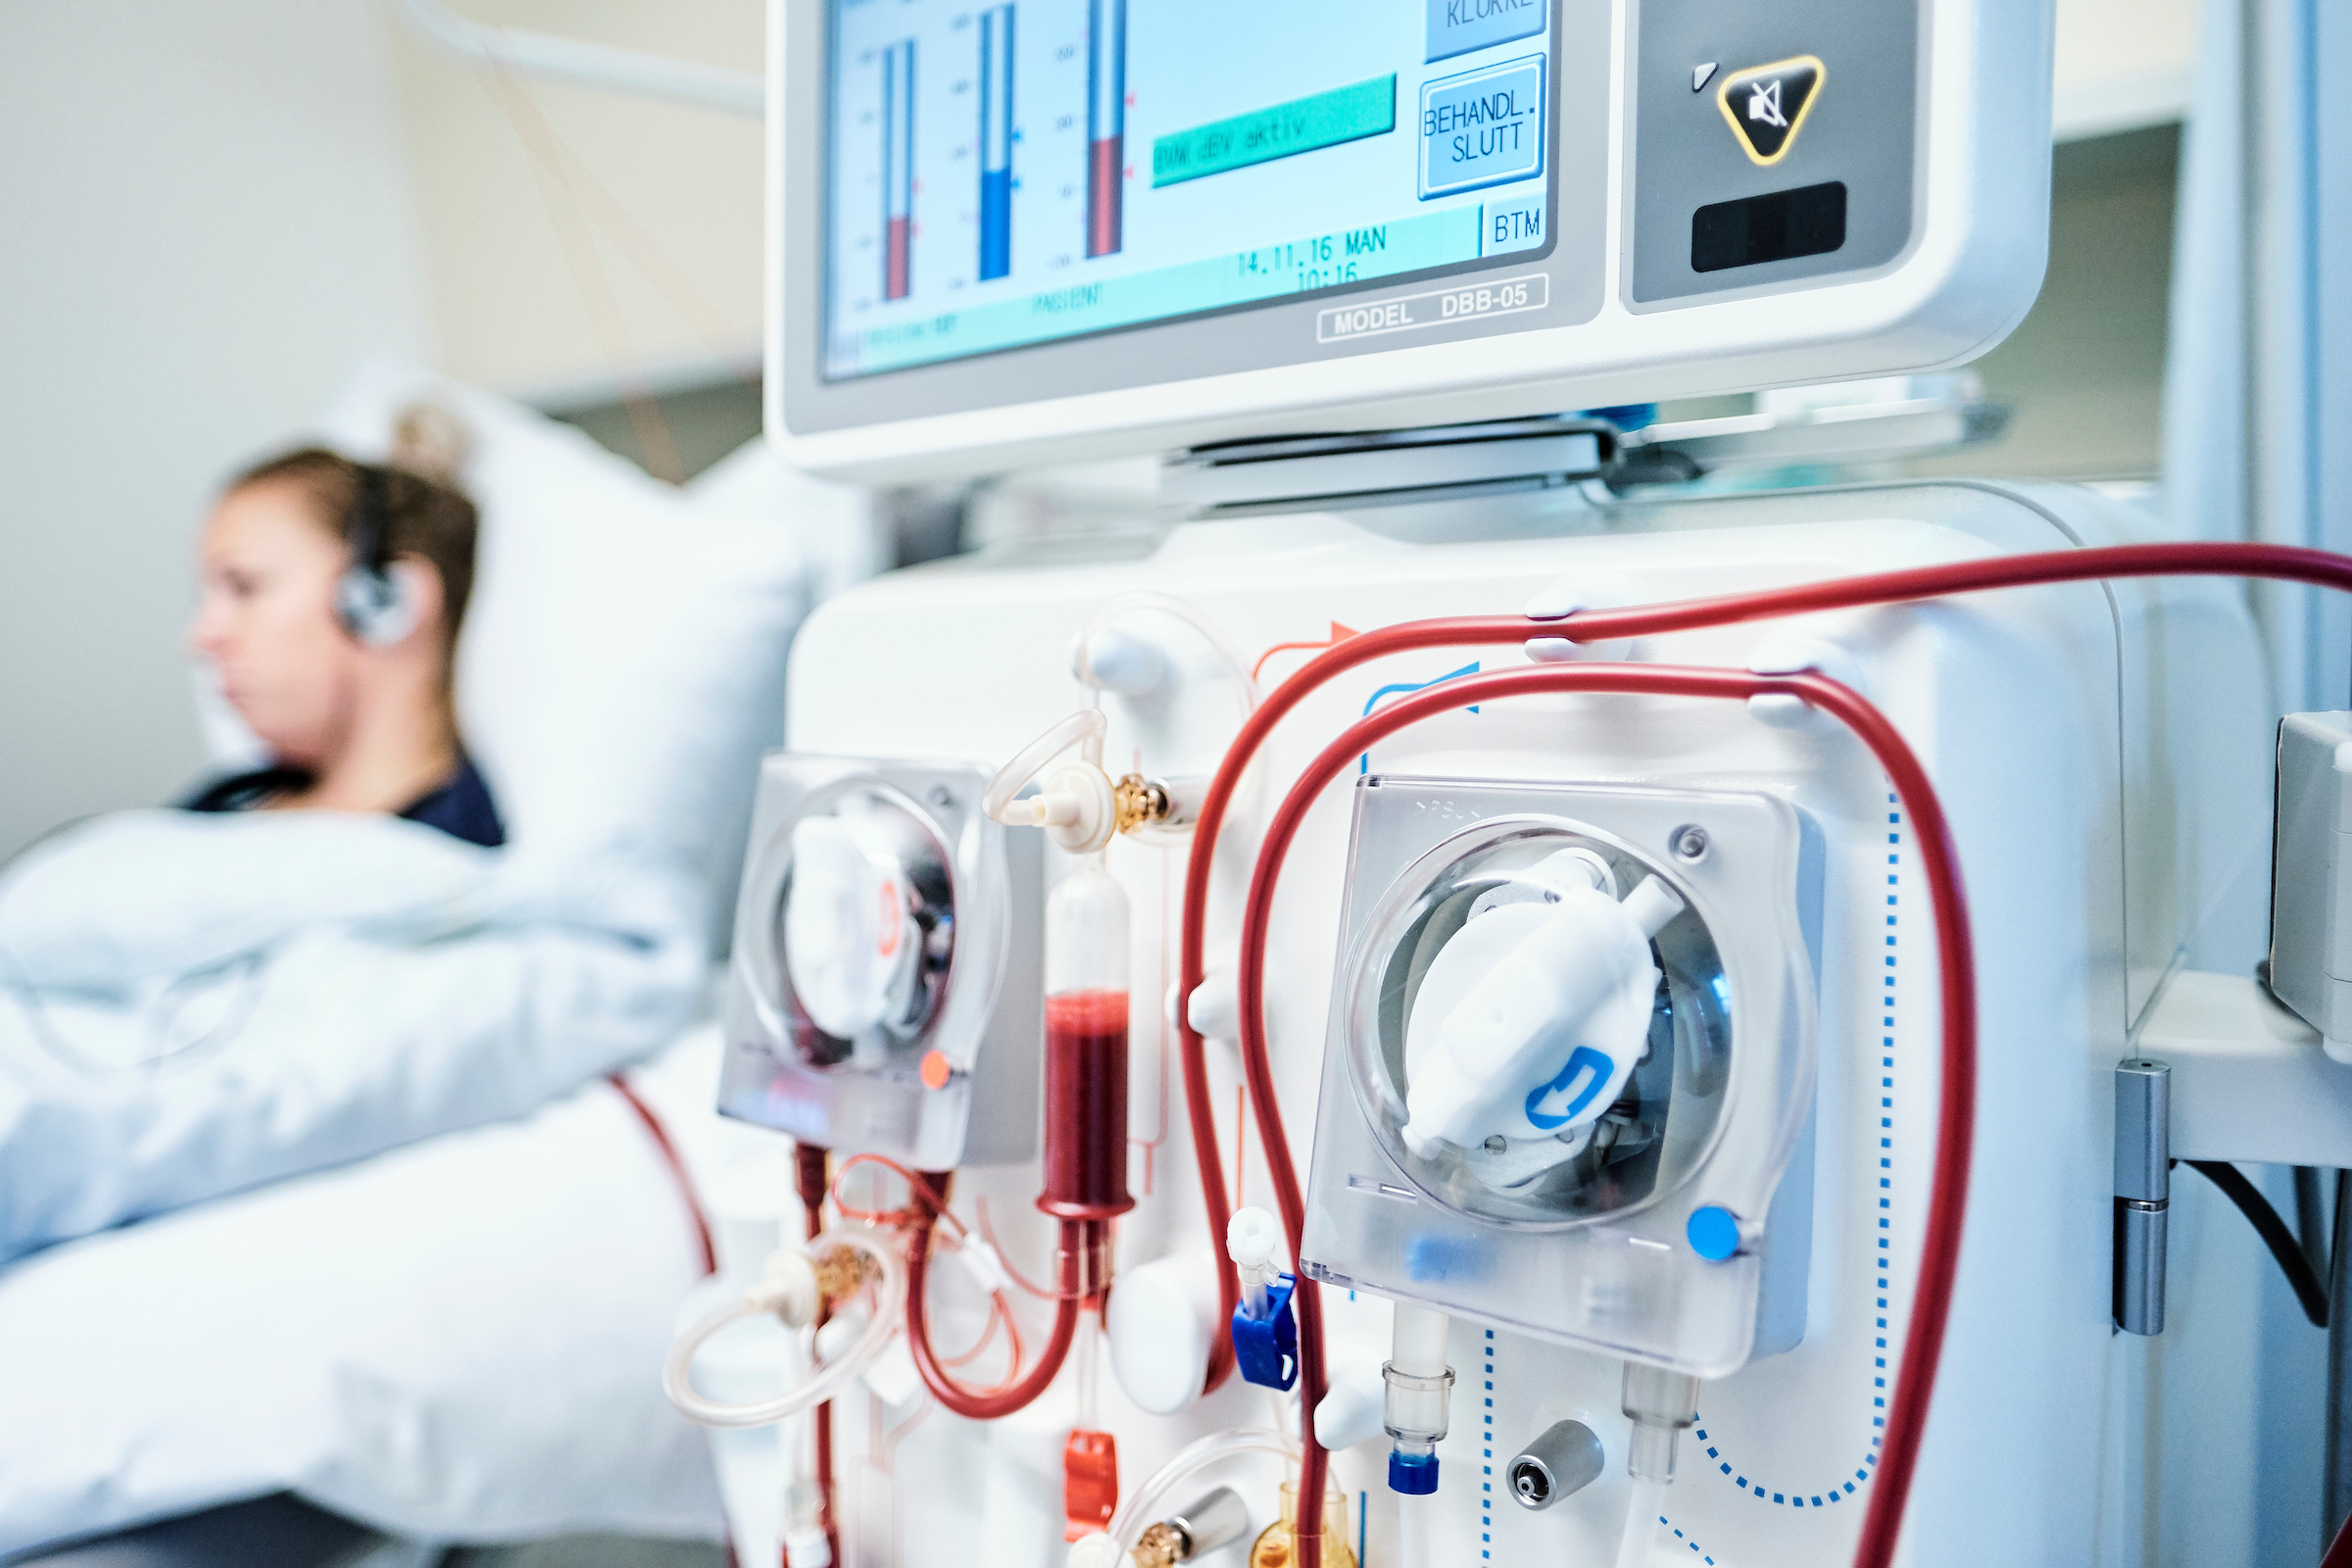 Patient on dialysis machine